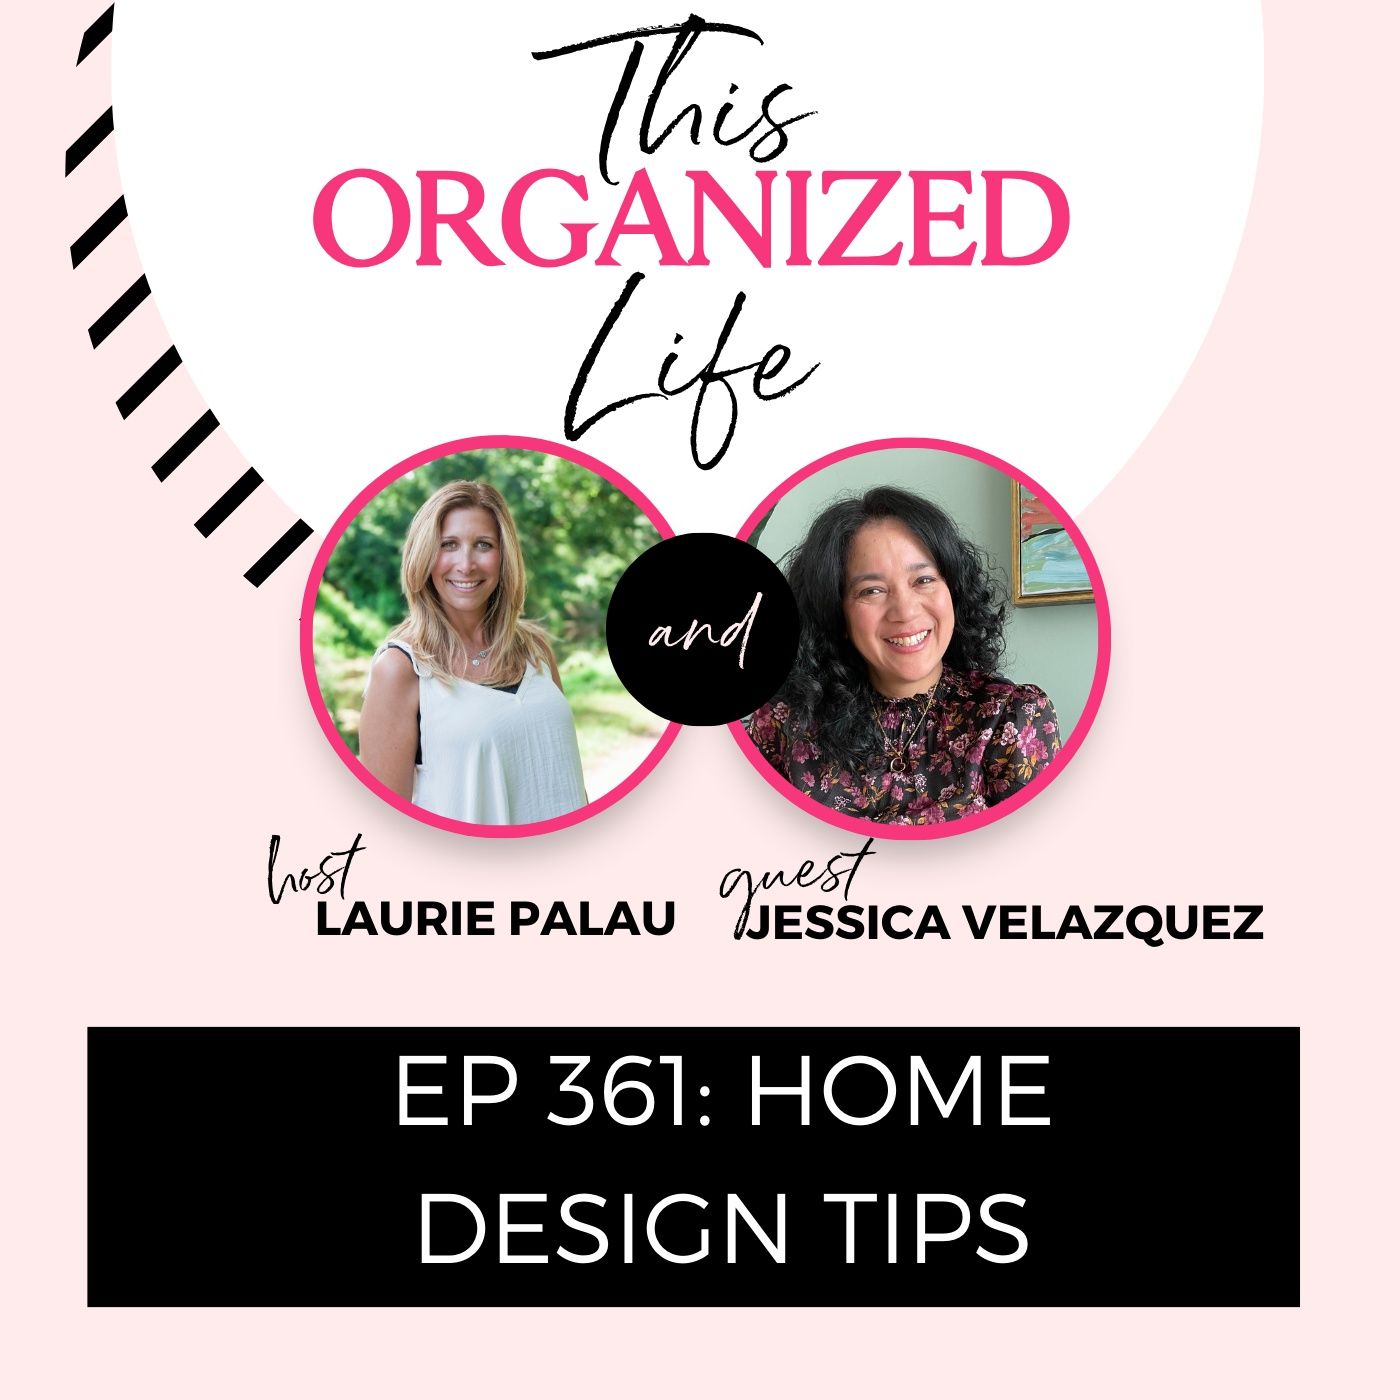 Home Design tips with Jessica Velazquez | Ep 361